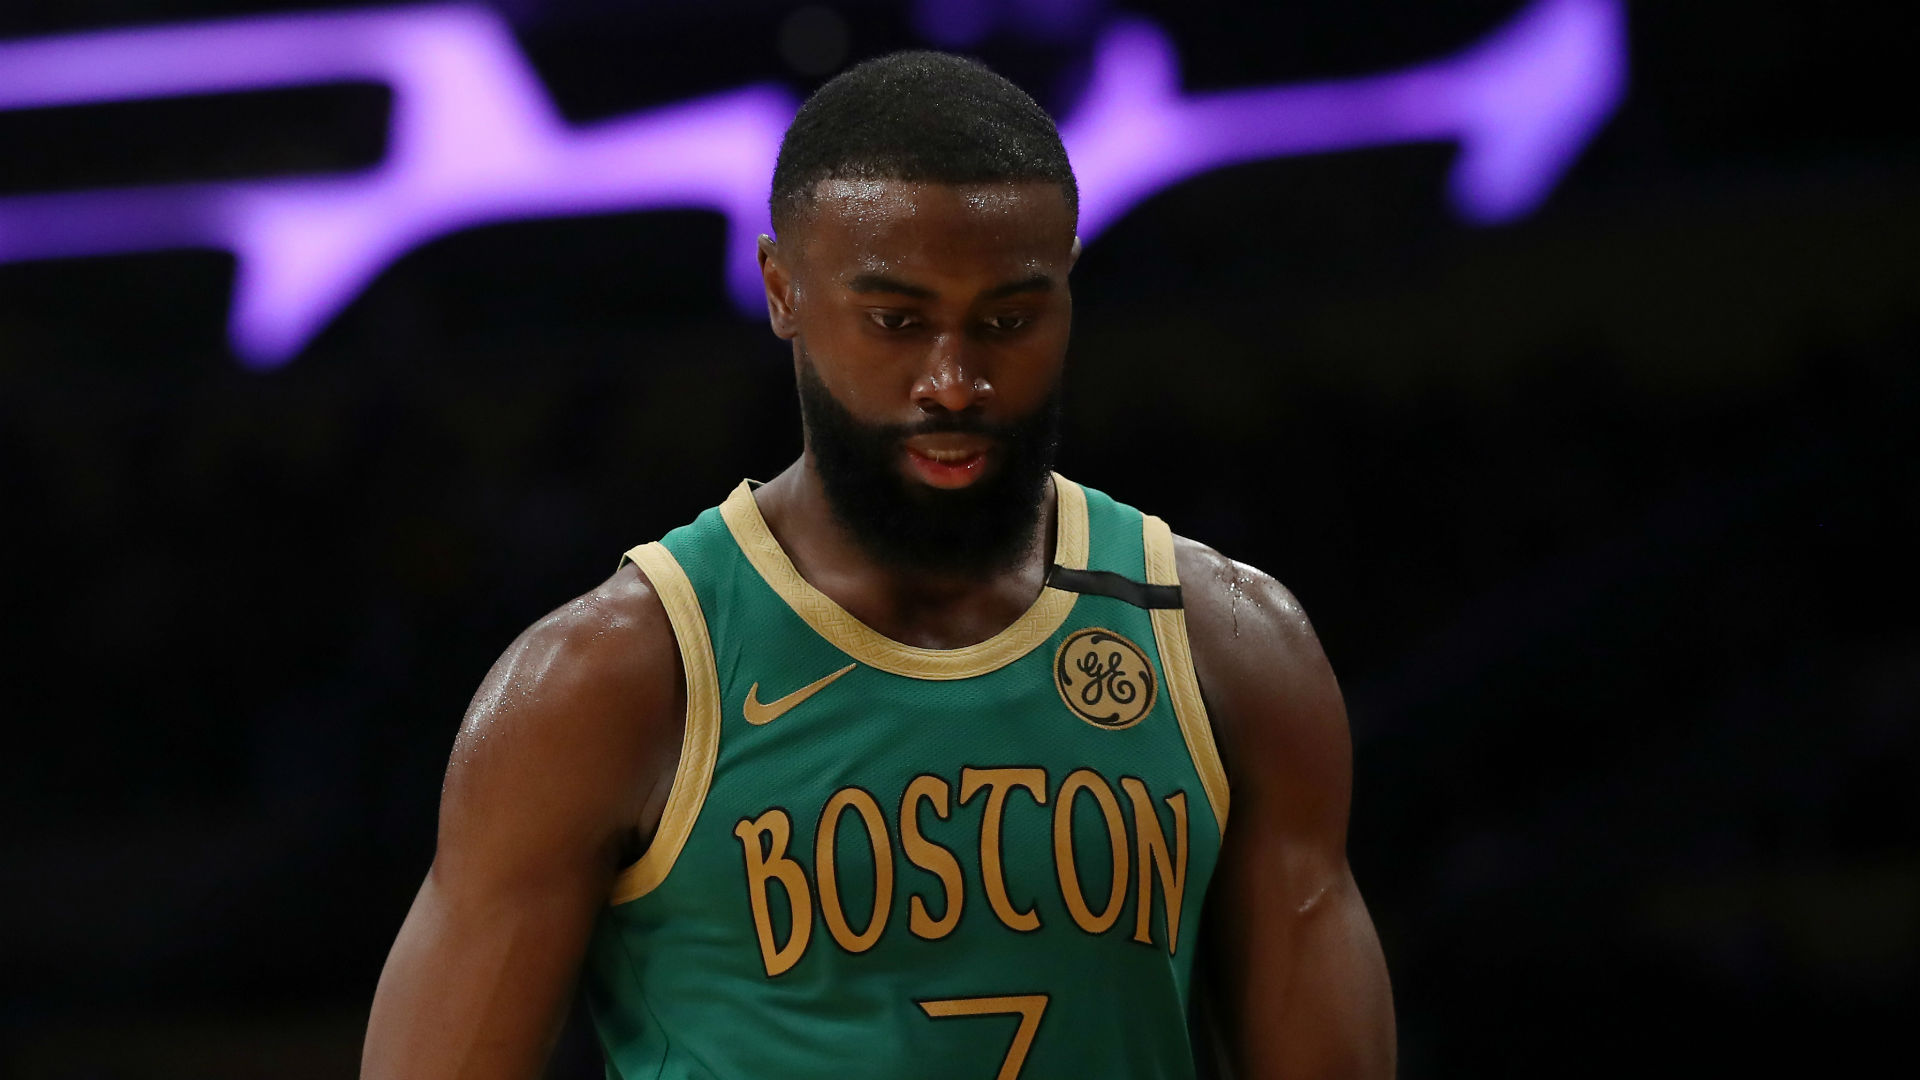 Boston Celtics guard Jaylen Brown spoke about his long drive to lead a protest in Atlanta.